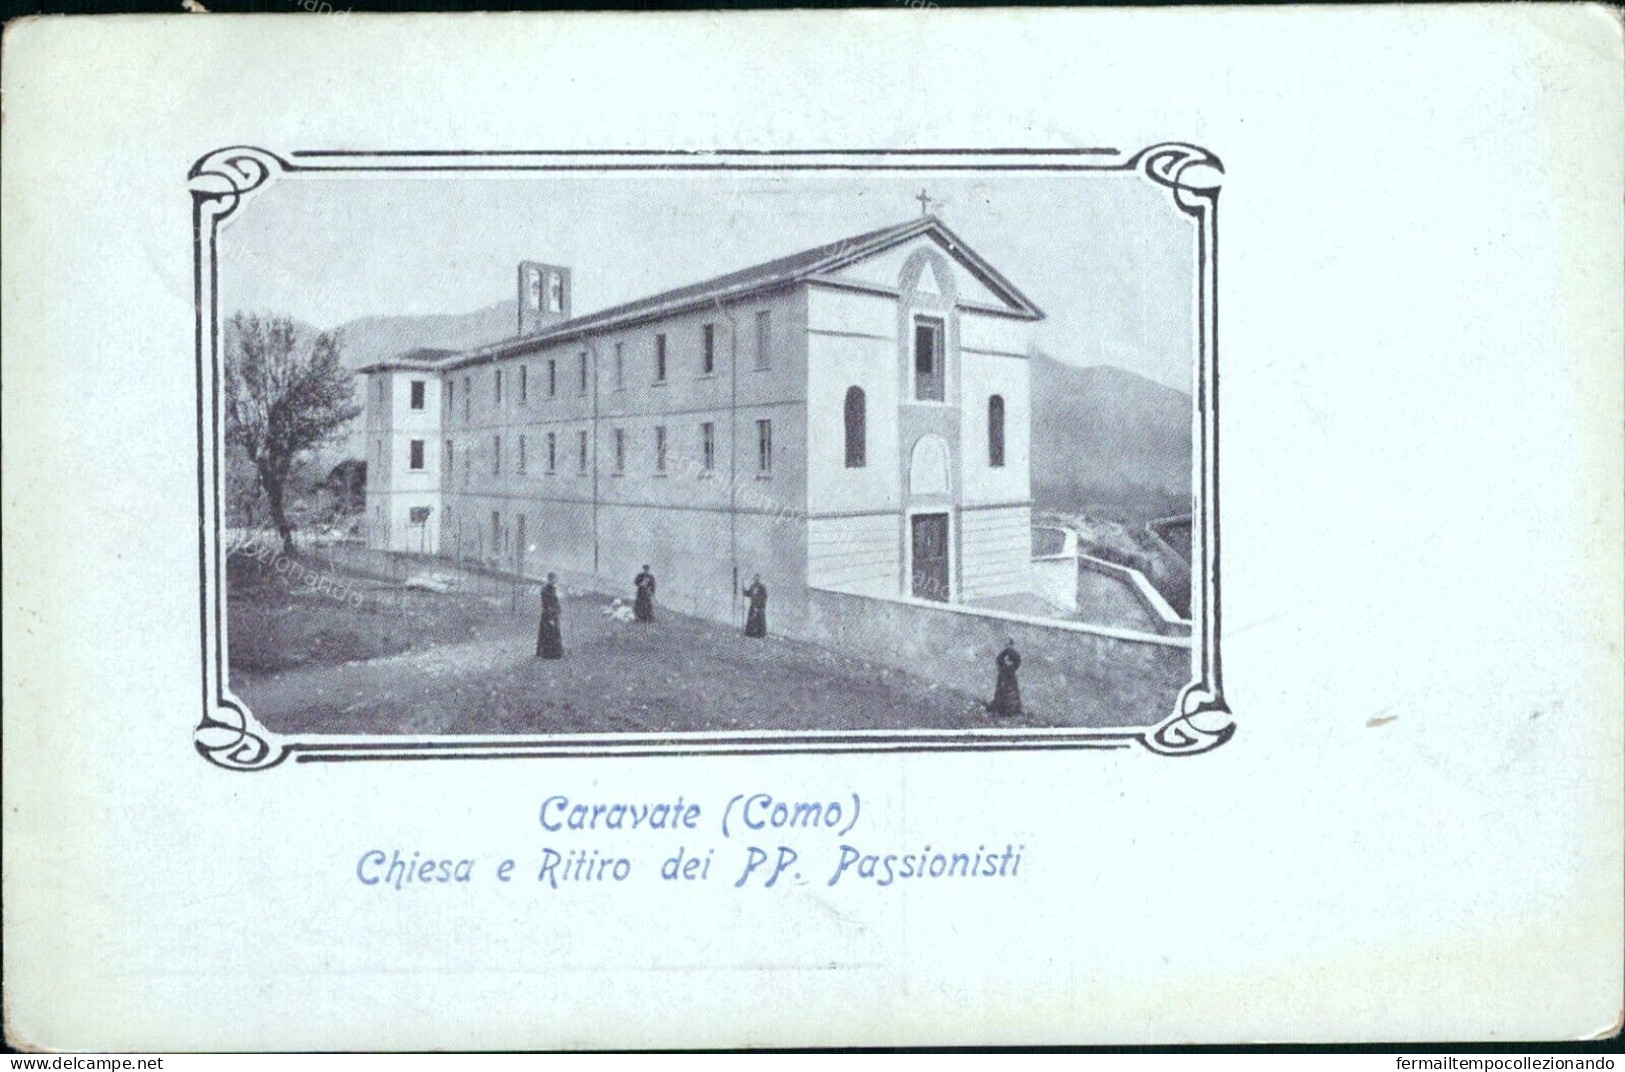 Cs85 Cartolina Caravate Chiesa E Ritiro Dei Padri Passionisti Varese 1912 - Varese